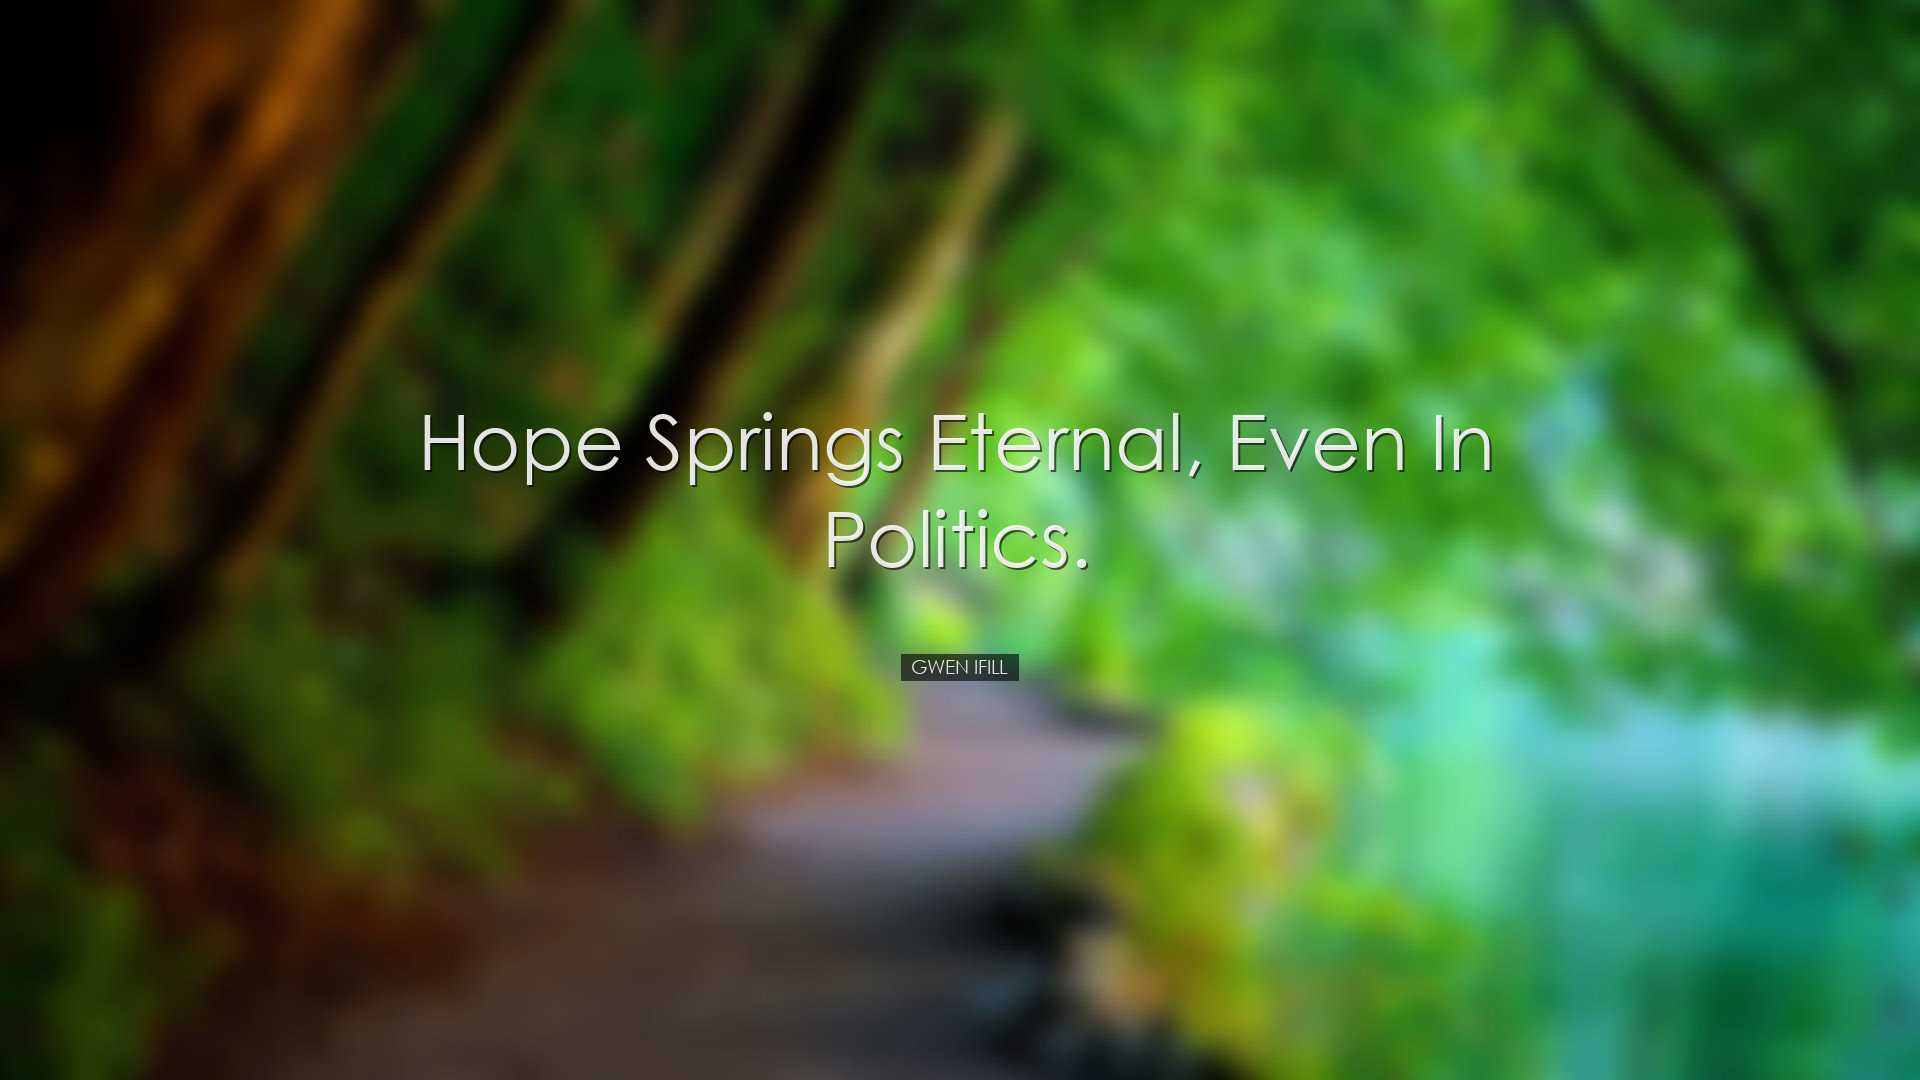 Hope springs eternal, even in politics. - Gwen Ifill